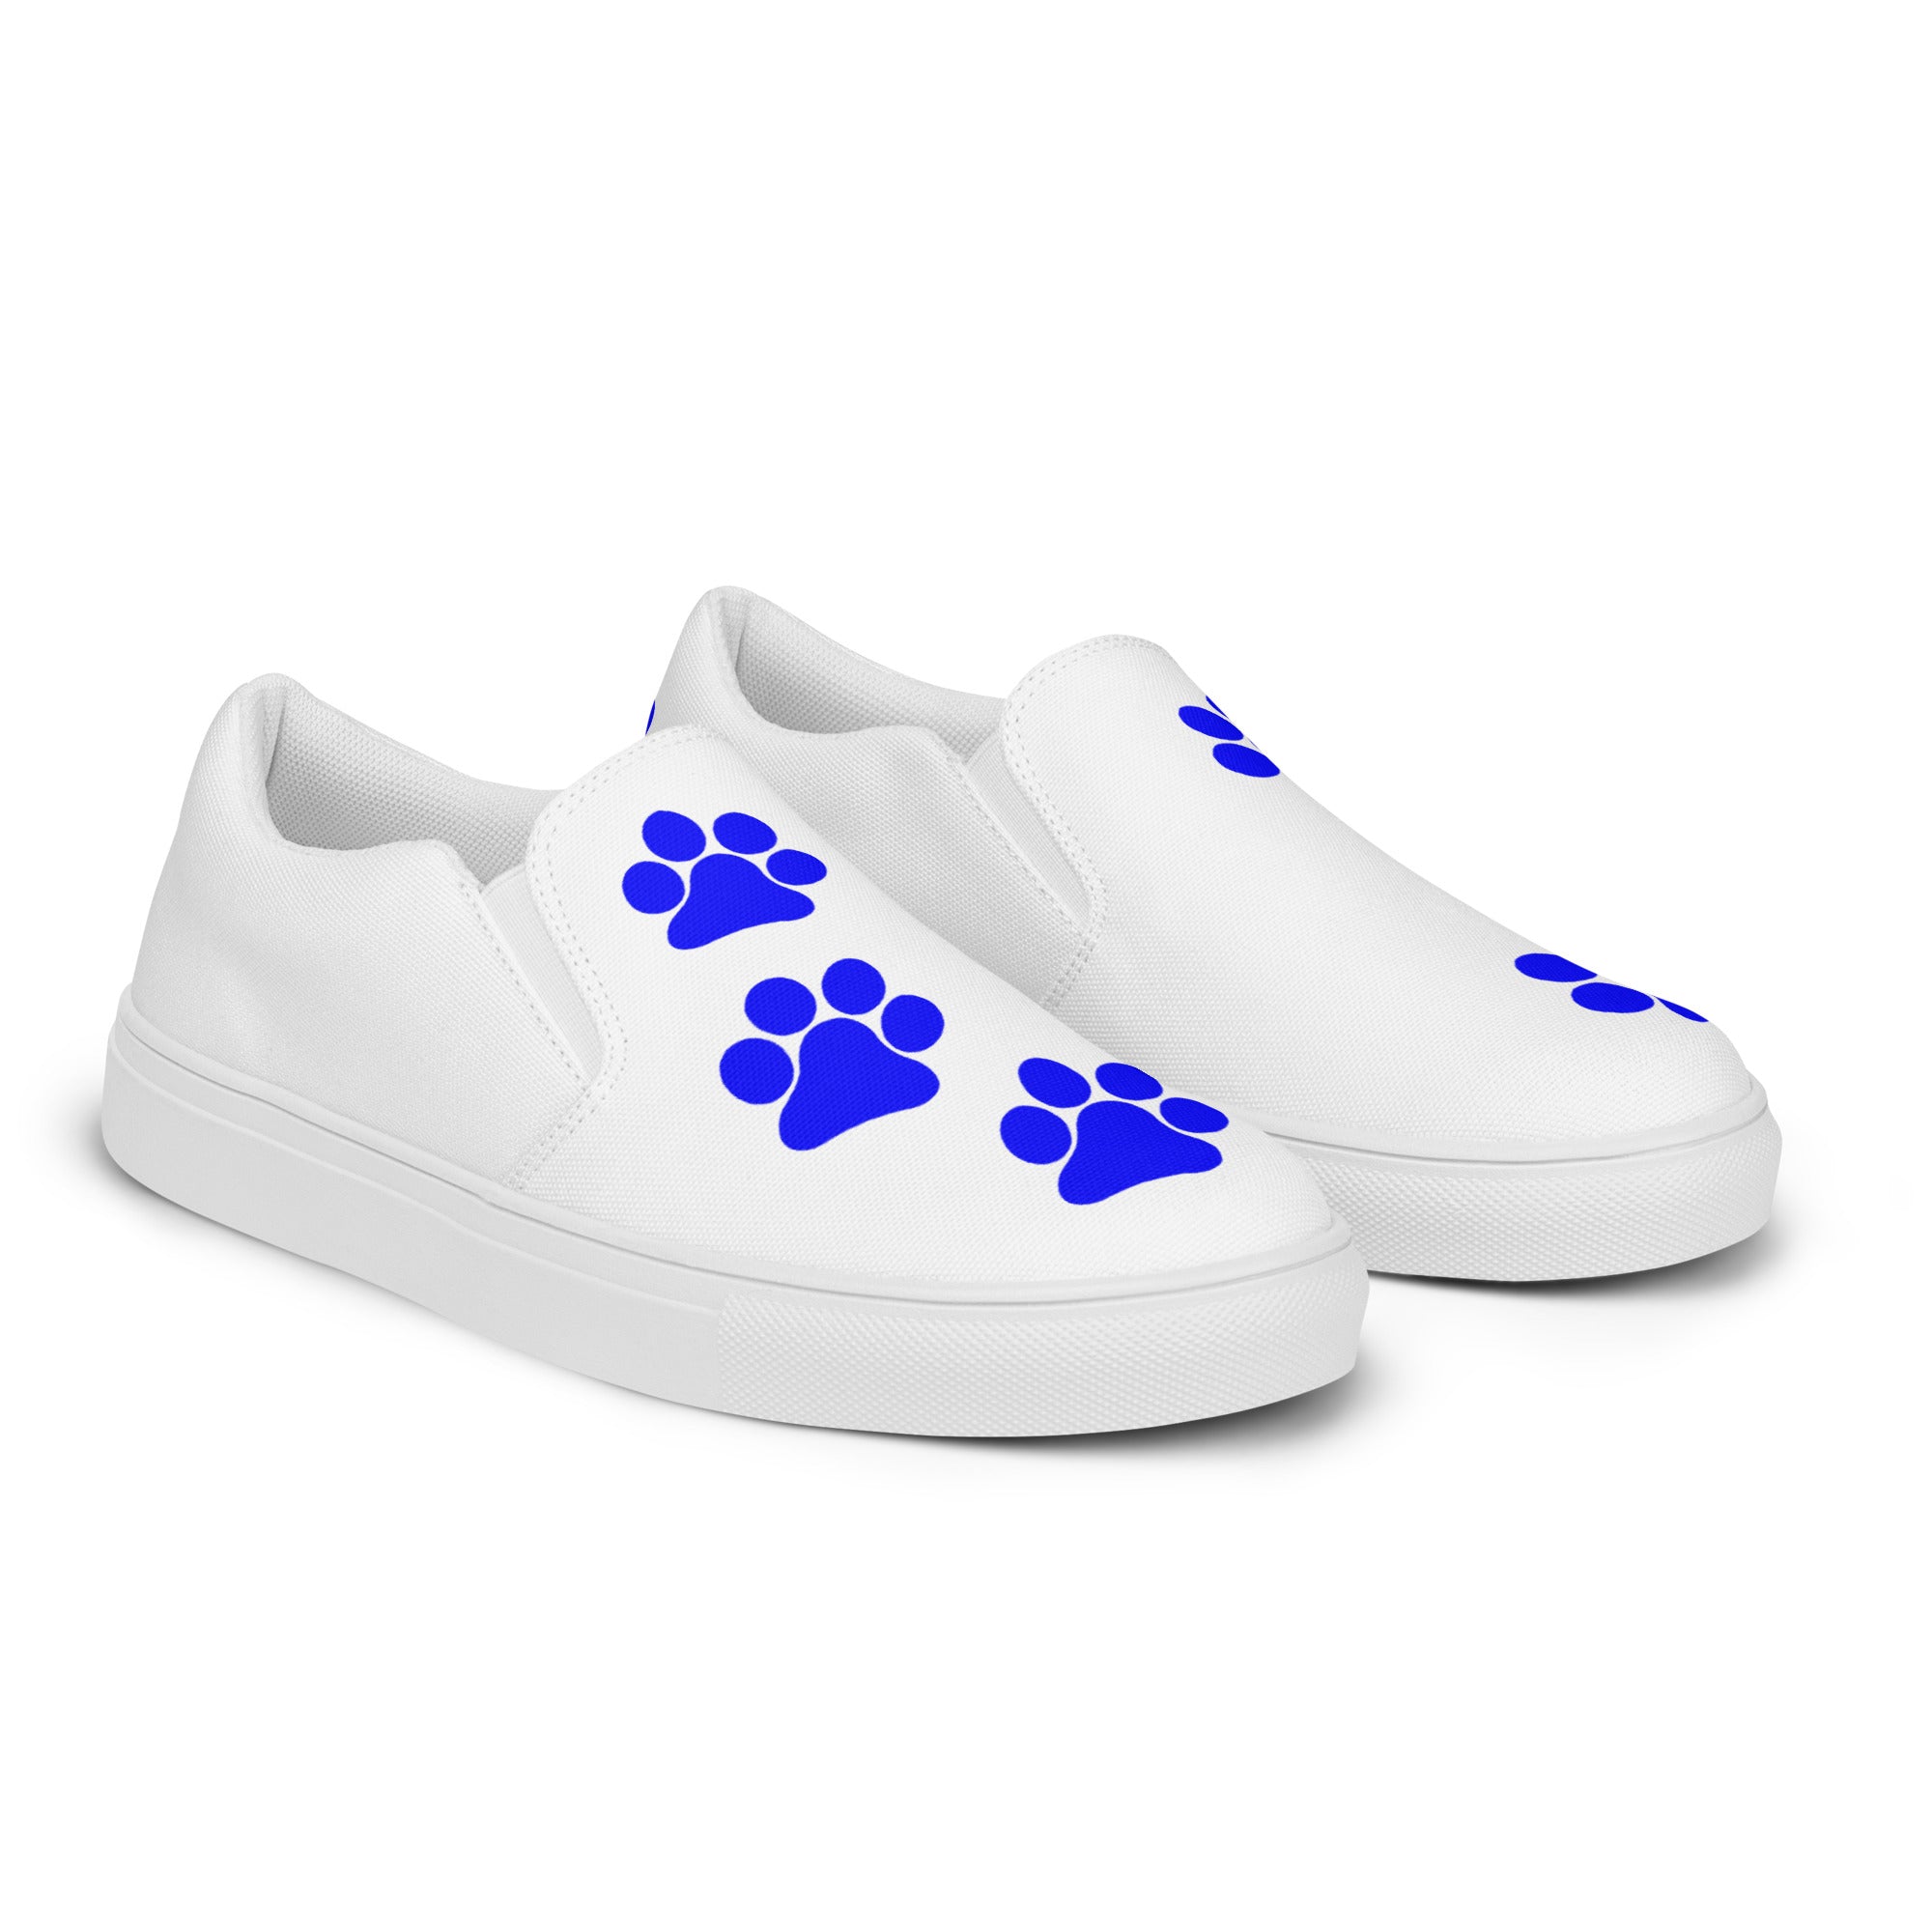 Women’s slip-on Blue Paw shoes